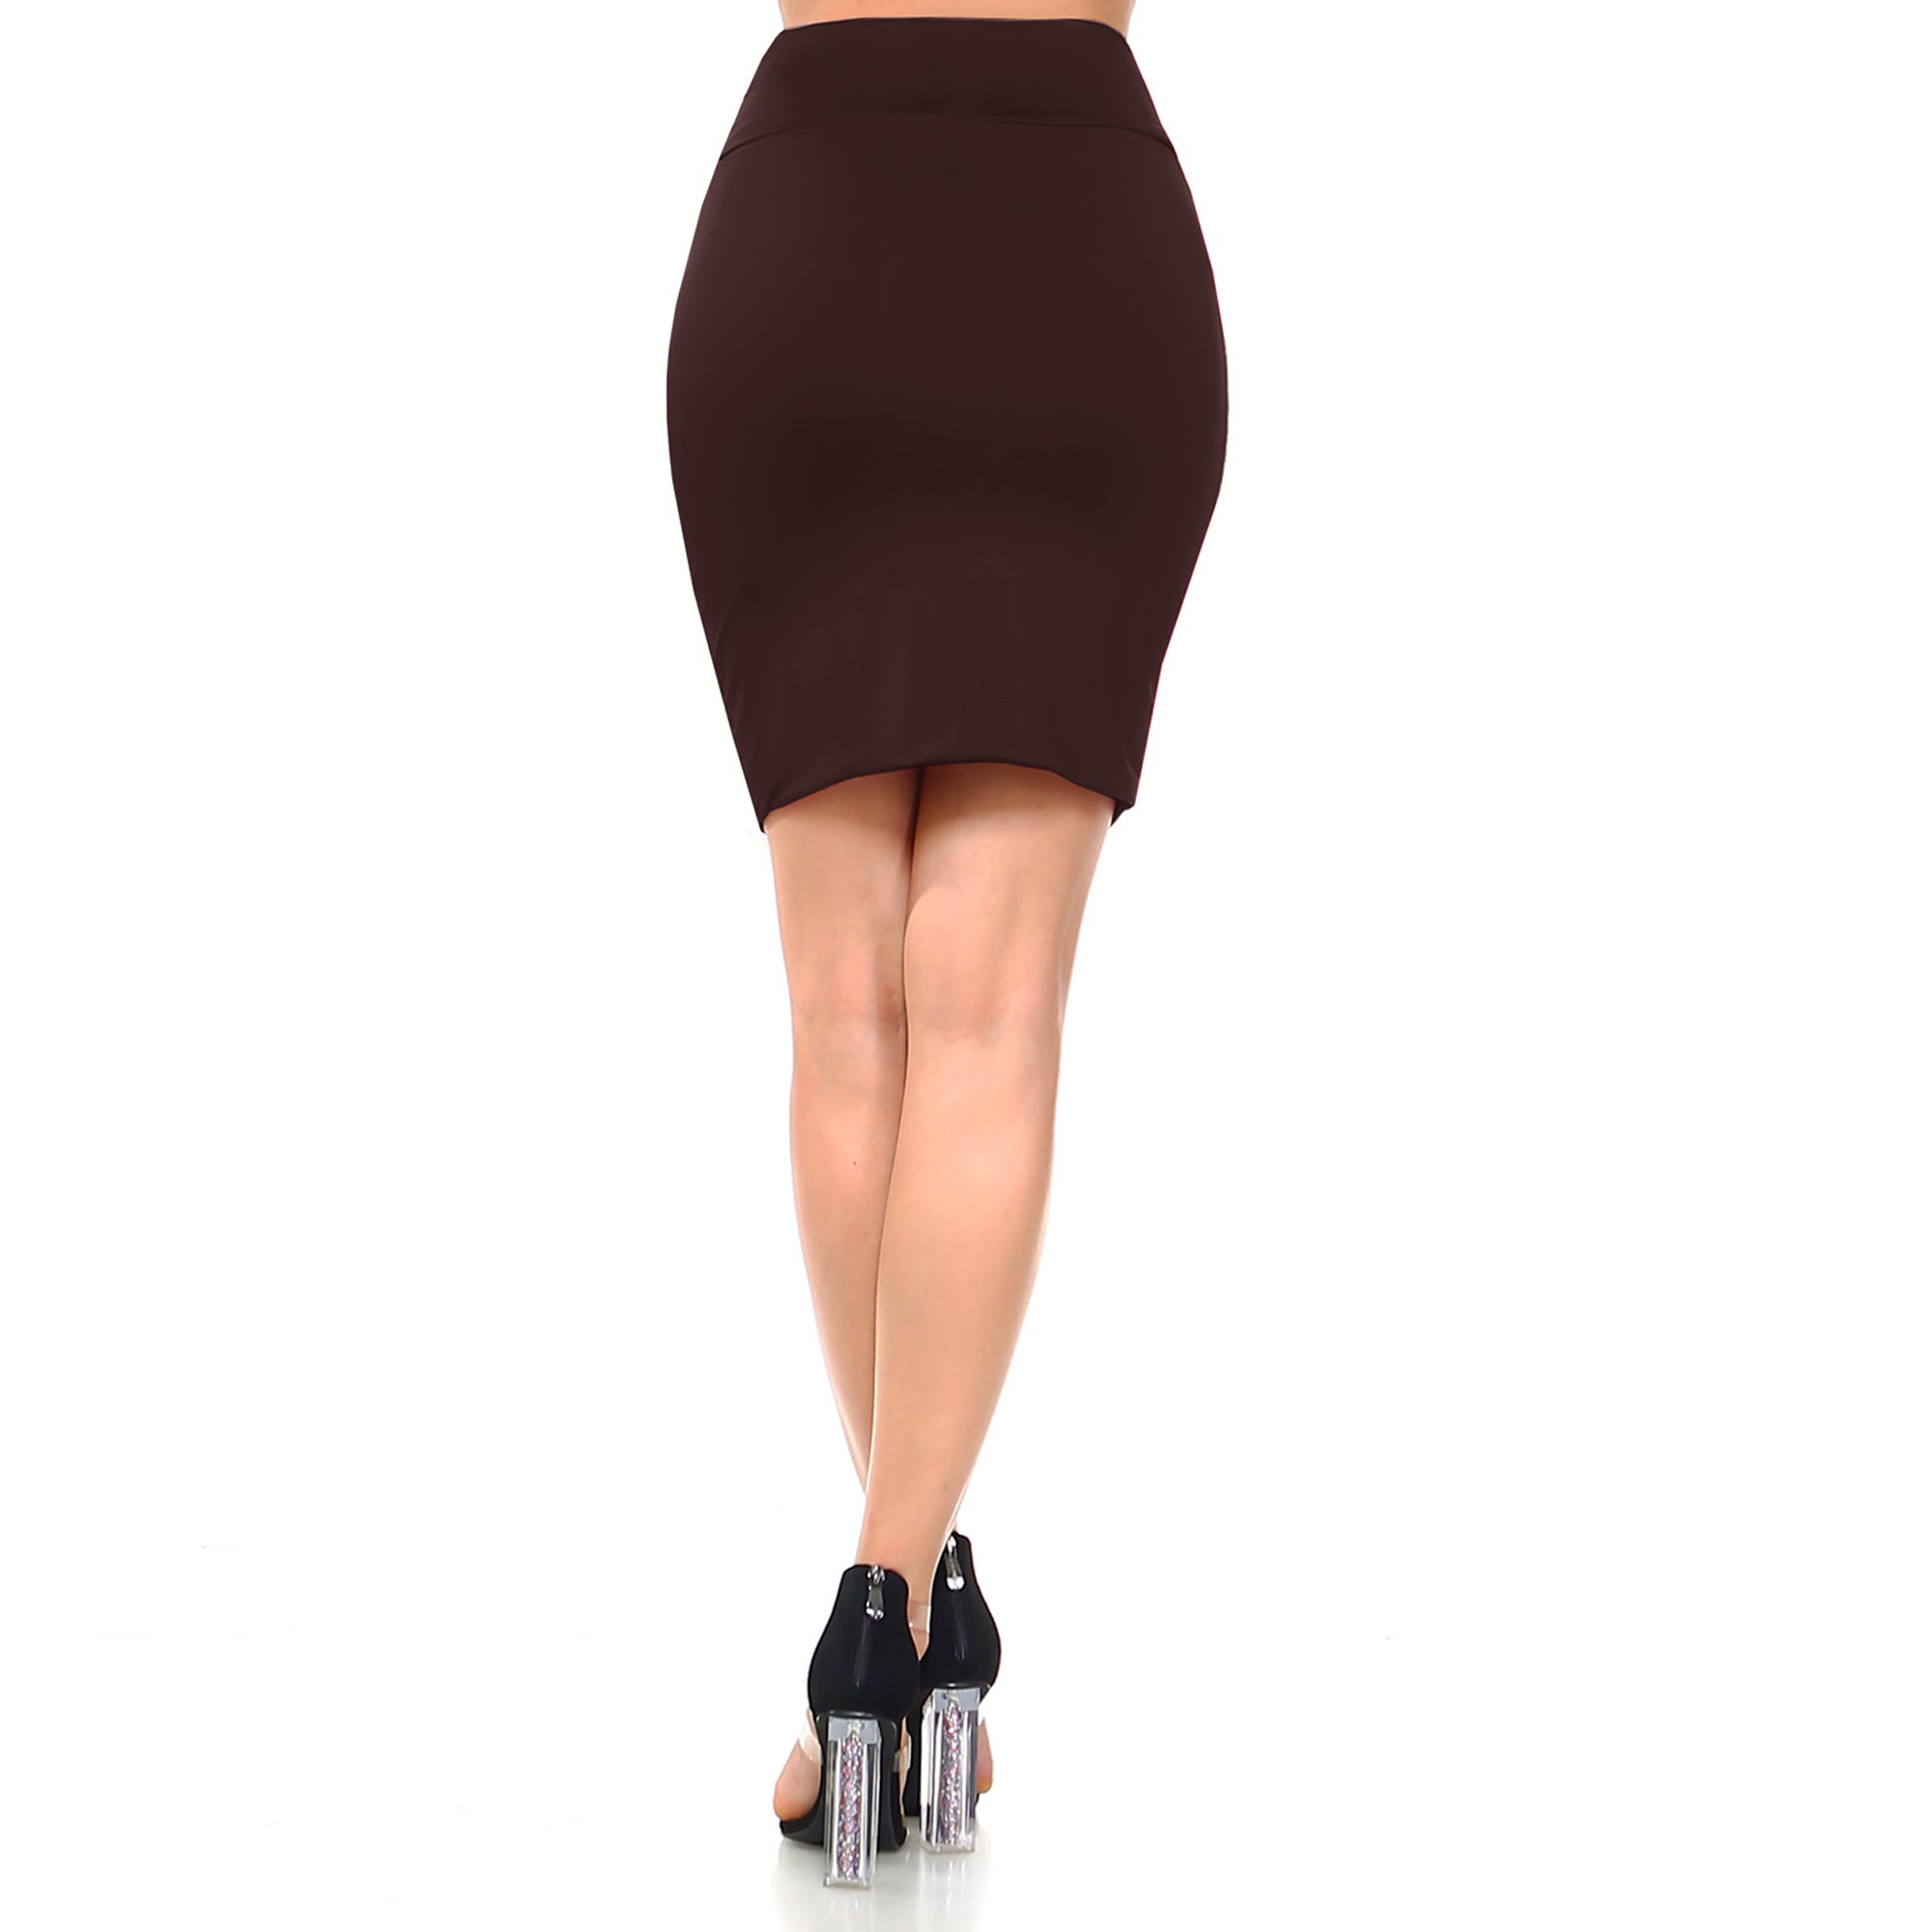 Fashionazzle Women's Casual Stretchy Bodycon Pencil Midi Mini Skirt